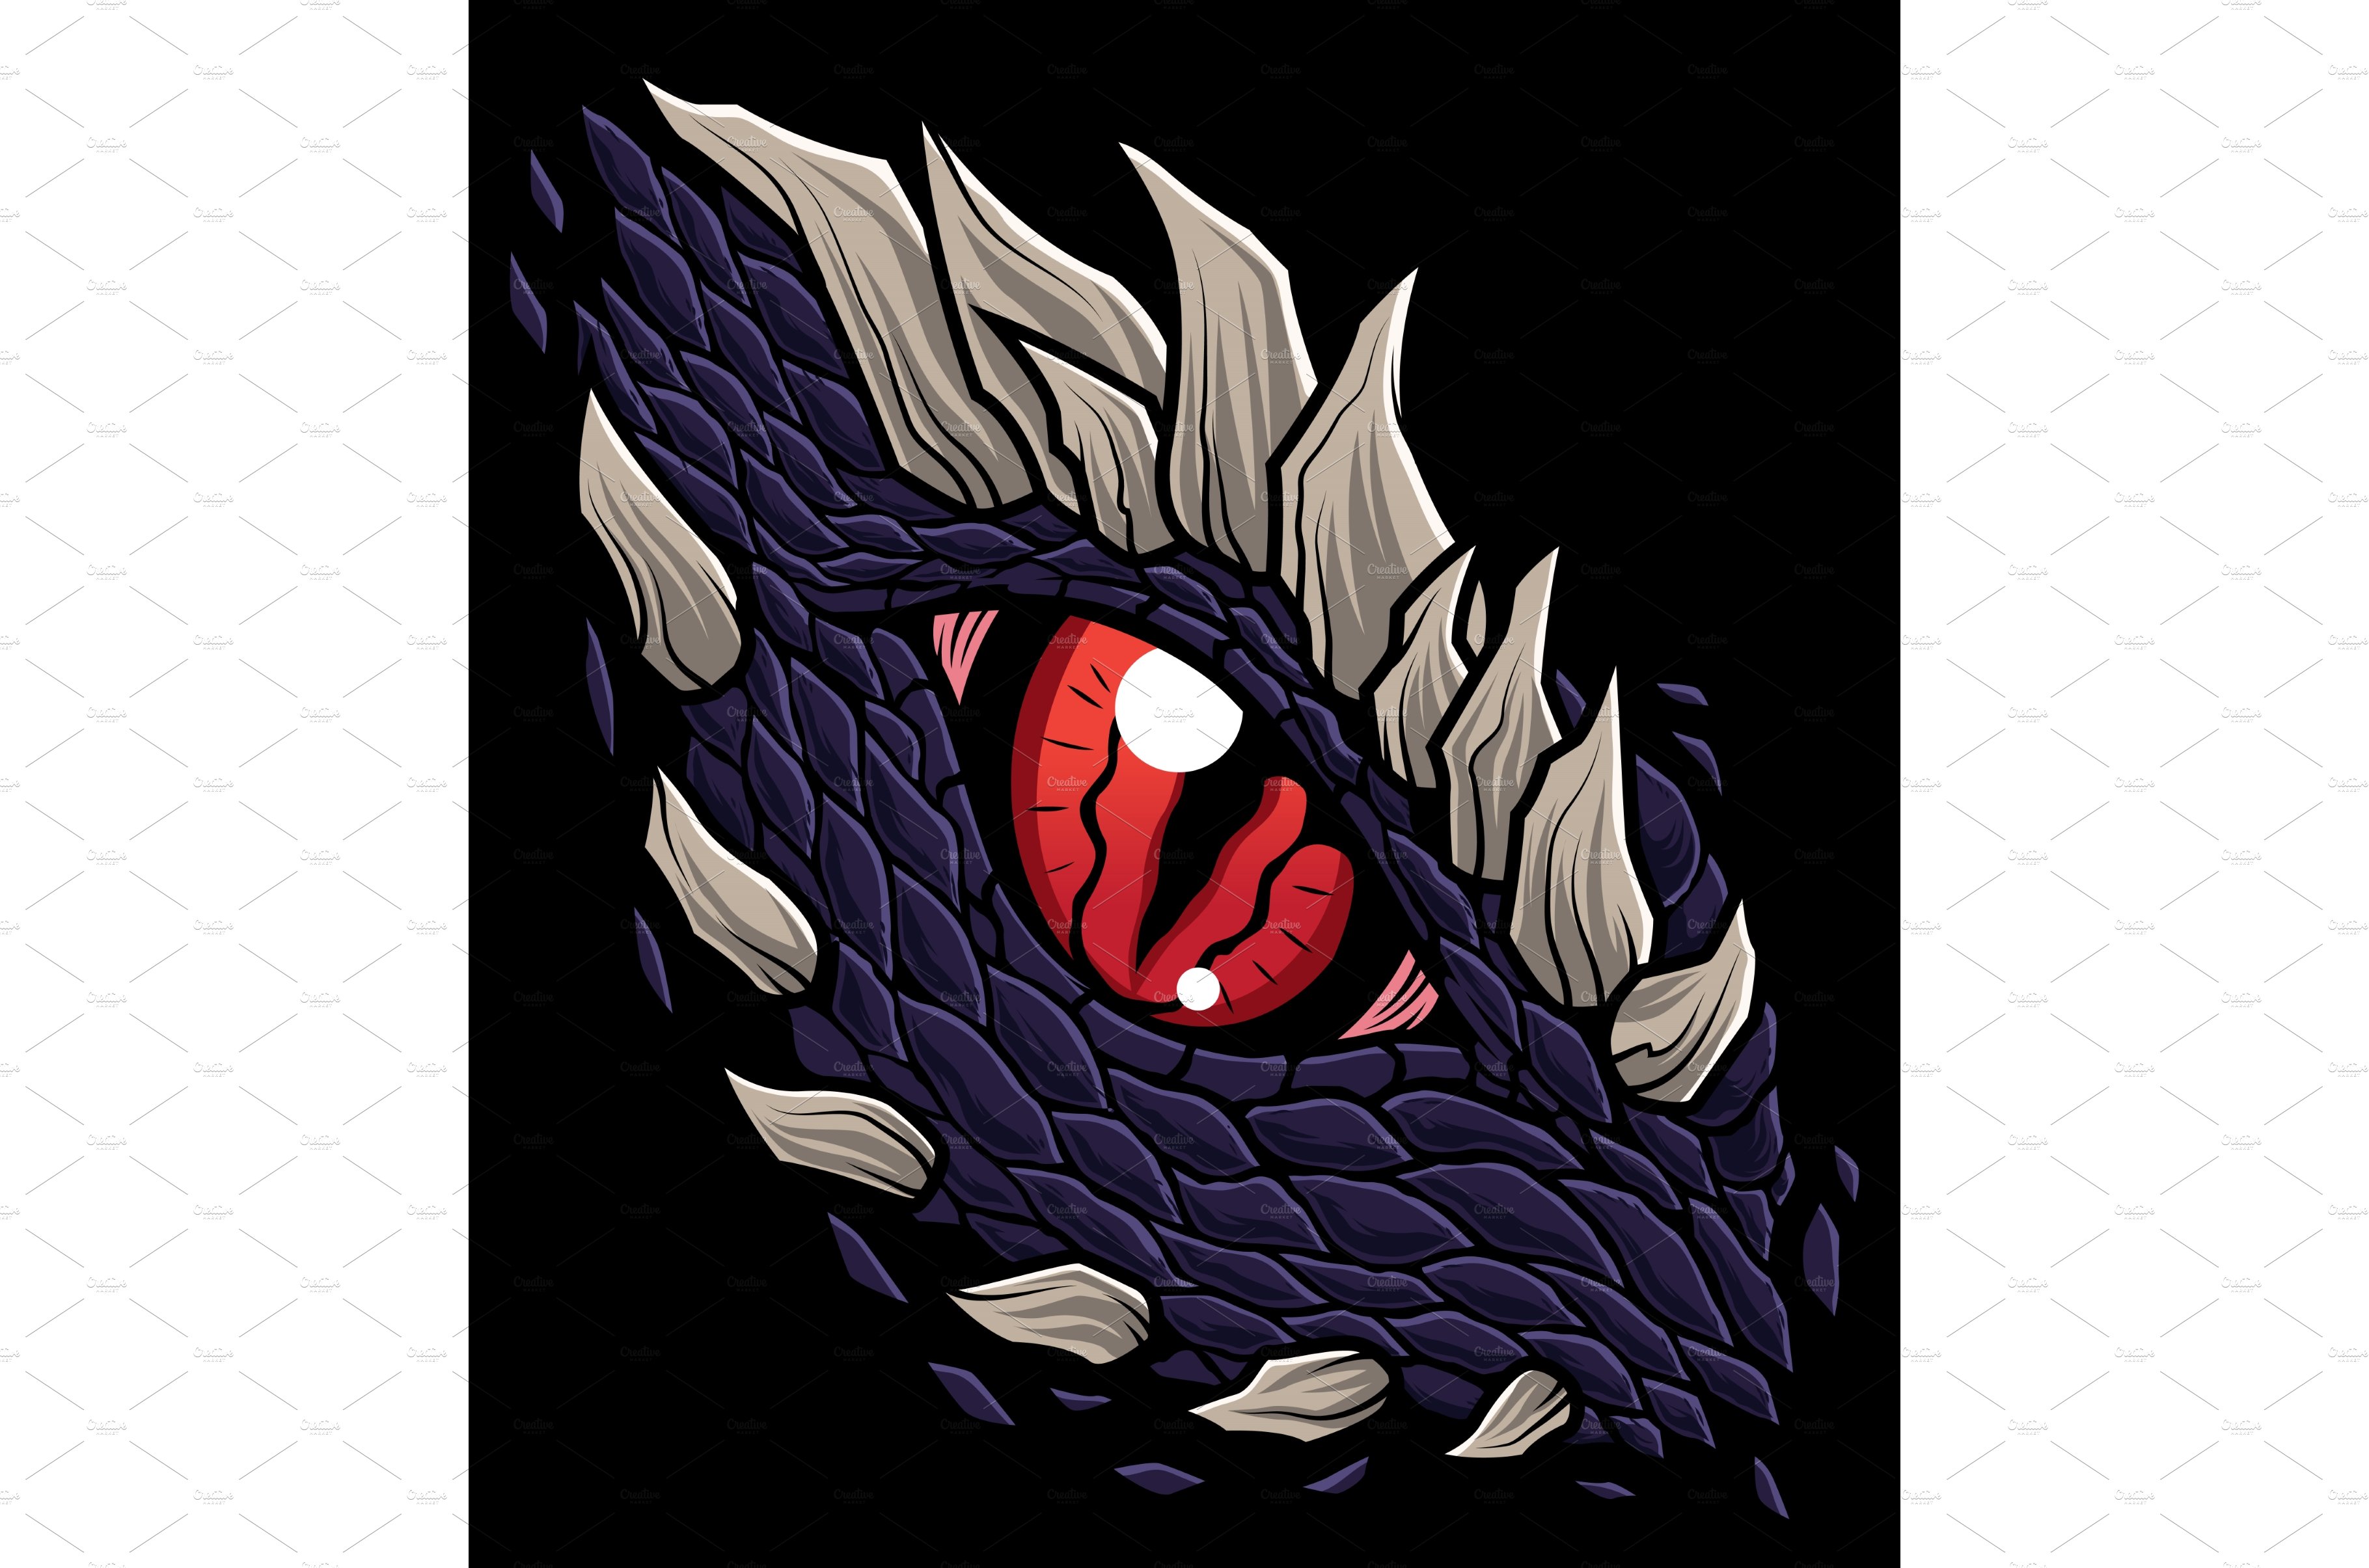 Dragons Eye Mascot cover image.